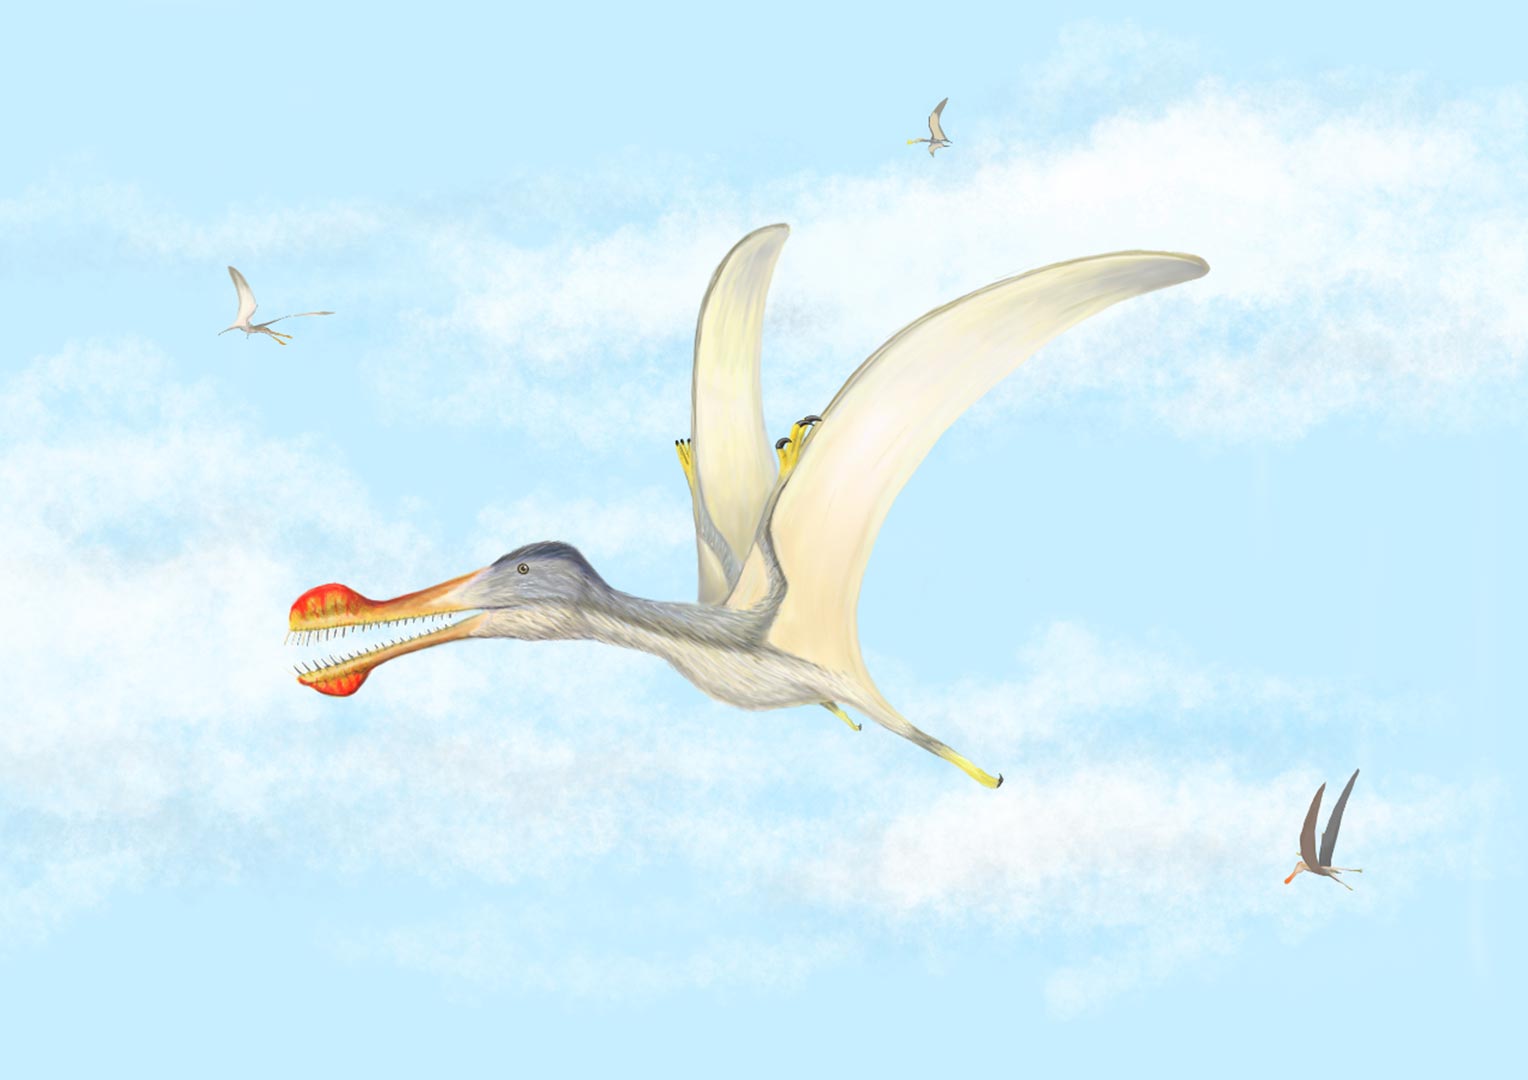 Pterosaur First Fliers